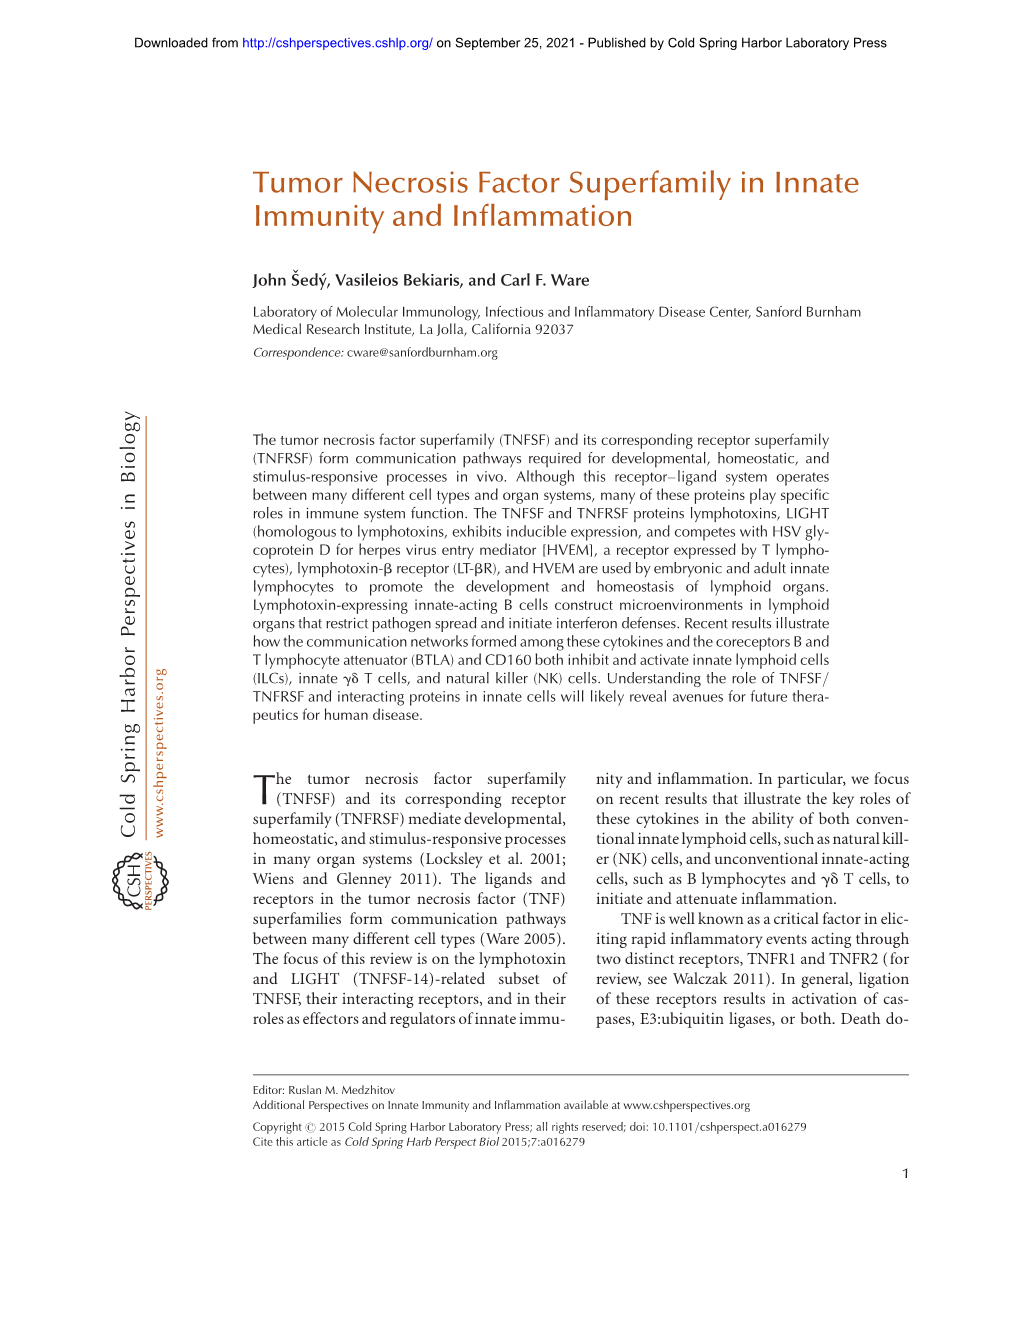 Tumor Necrosis Factor Superfamily in Innate Immunity and Inflammation